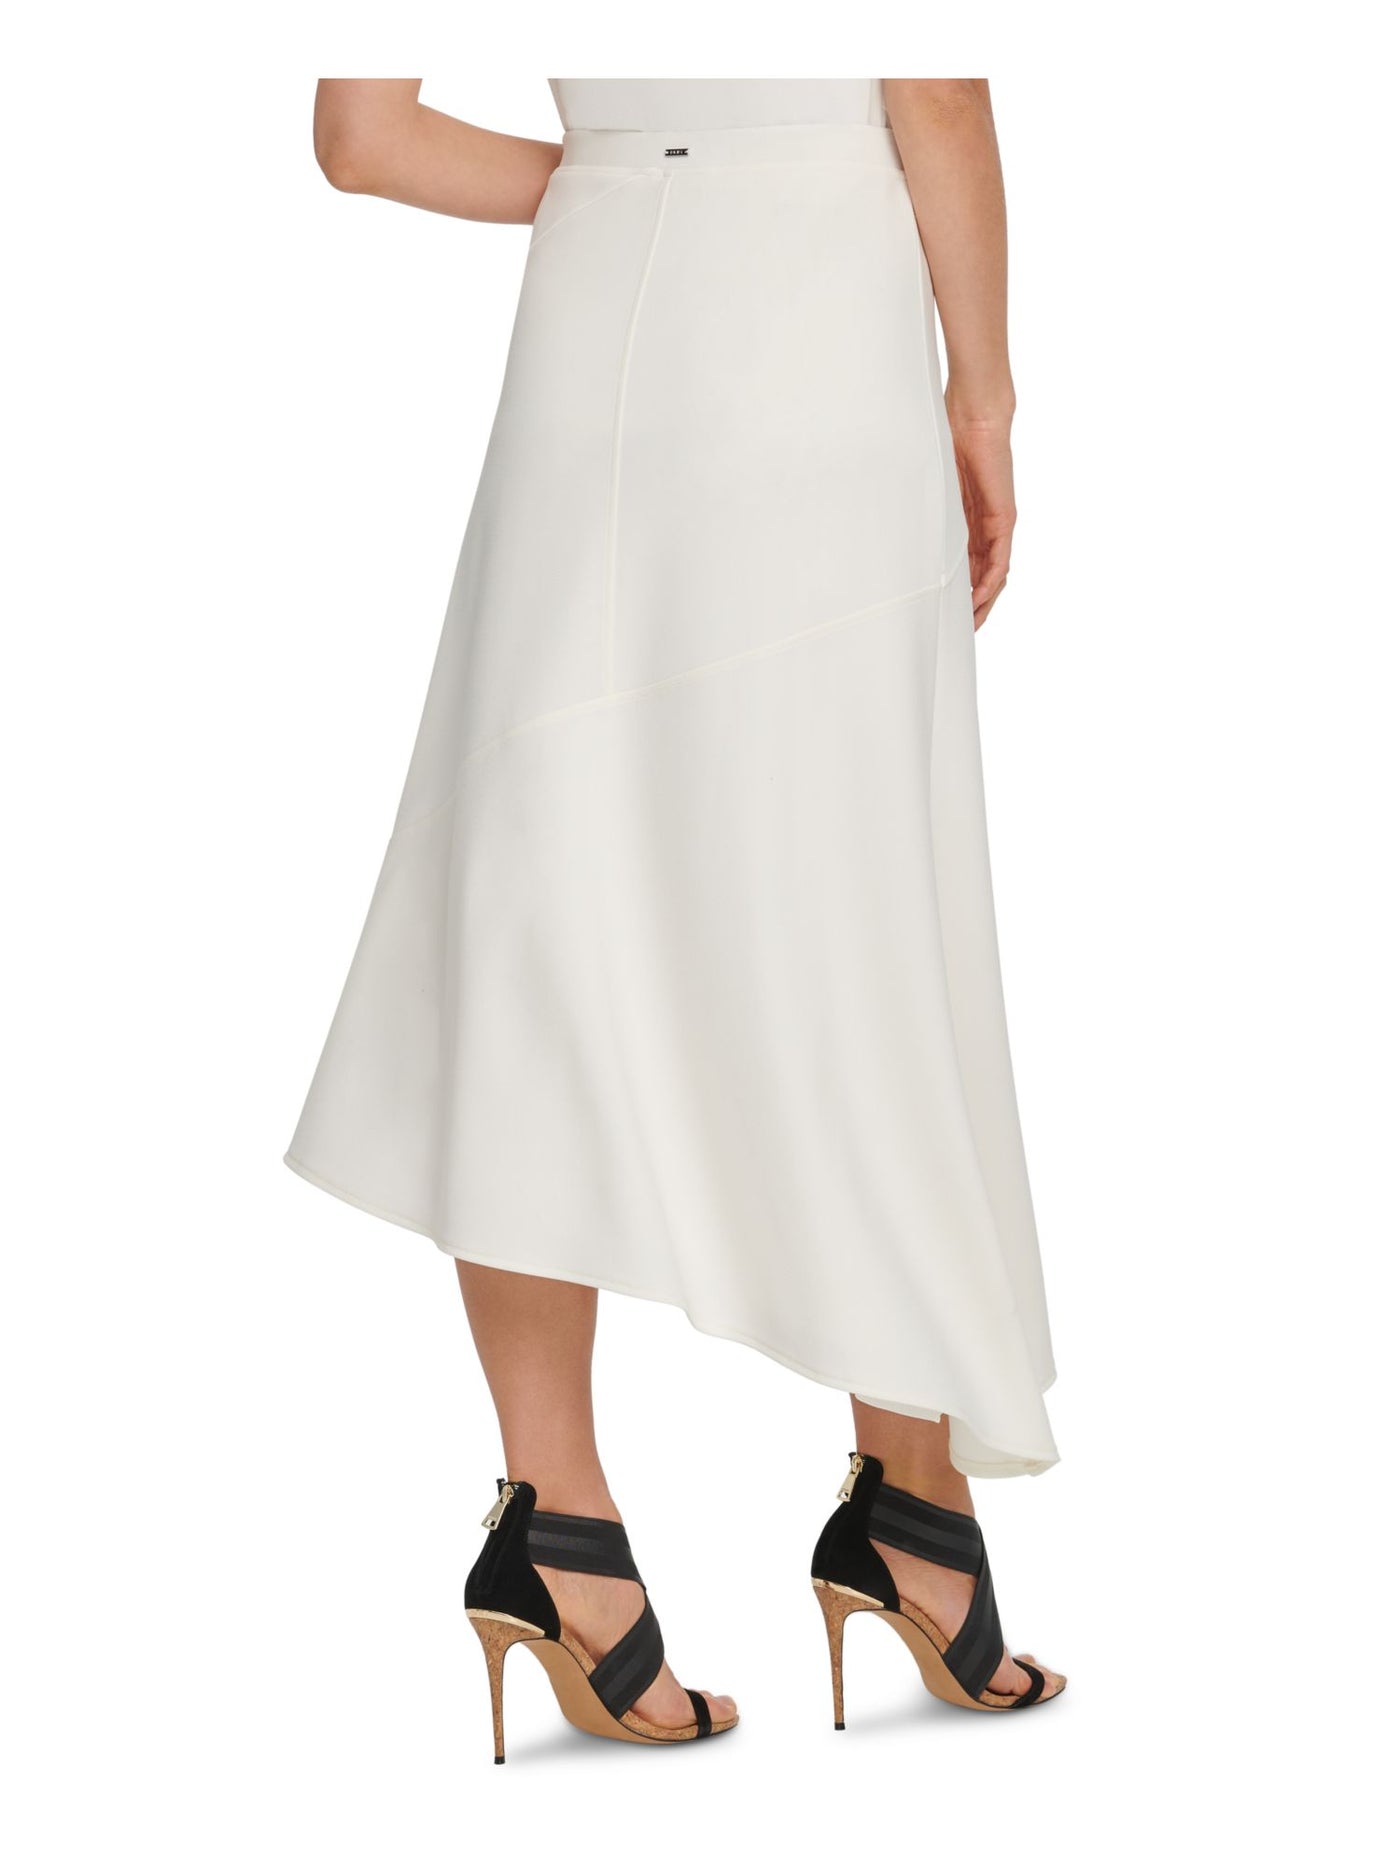 DKNY Womens Ivory Tea-Length Shift Skirt M